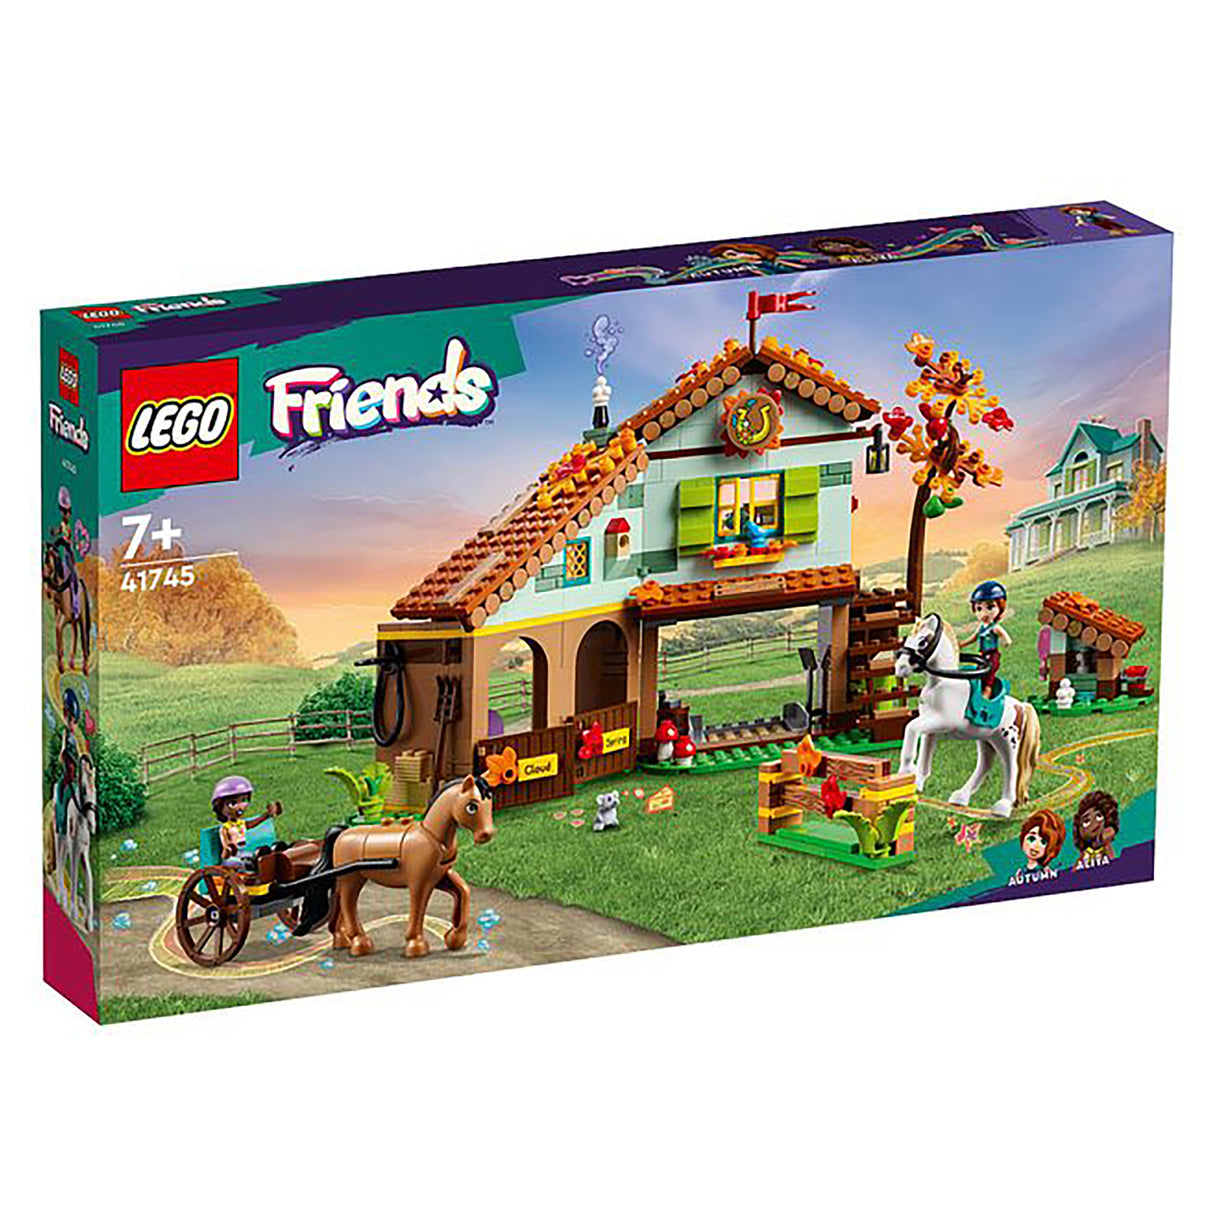 LEGO Friends Autumn's Horse Stable 41745 (545 pieces)